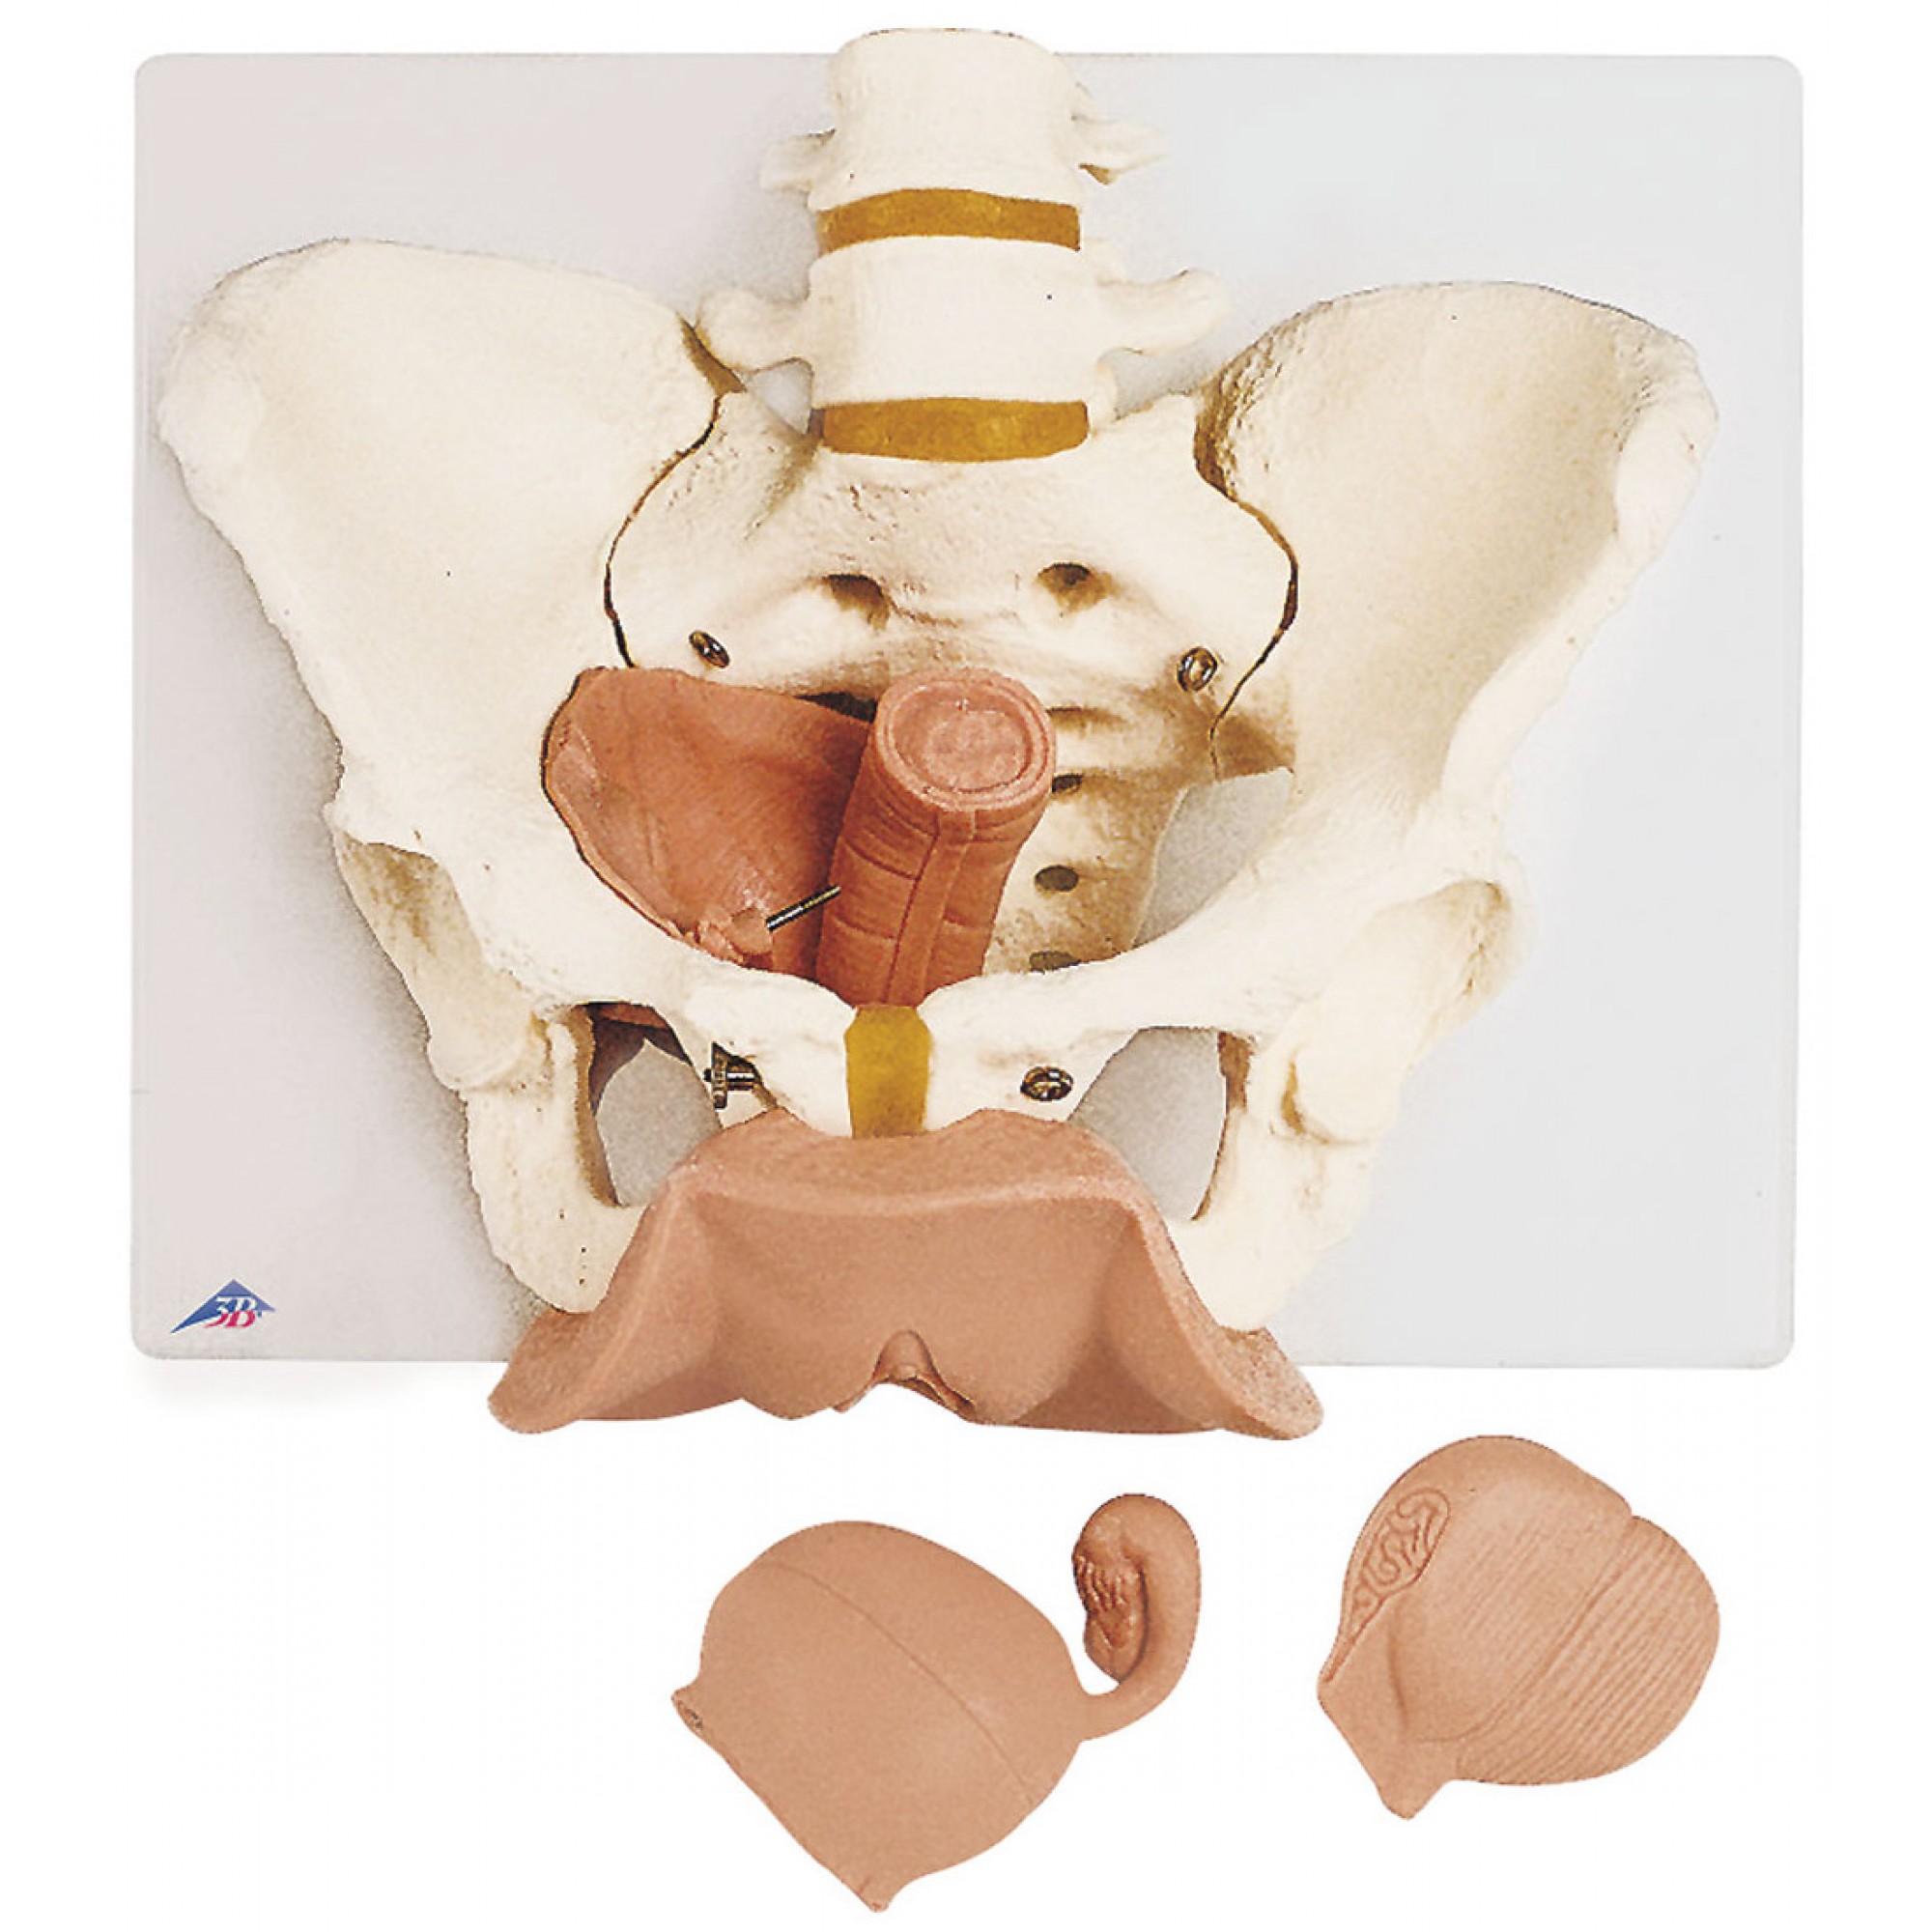 [3B]L31 3분리 여성 골반골격모형/여성 생식기 해부학모형 / Female Pelvis Skeleton with Genital Organs, 3 part